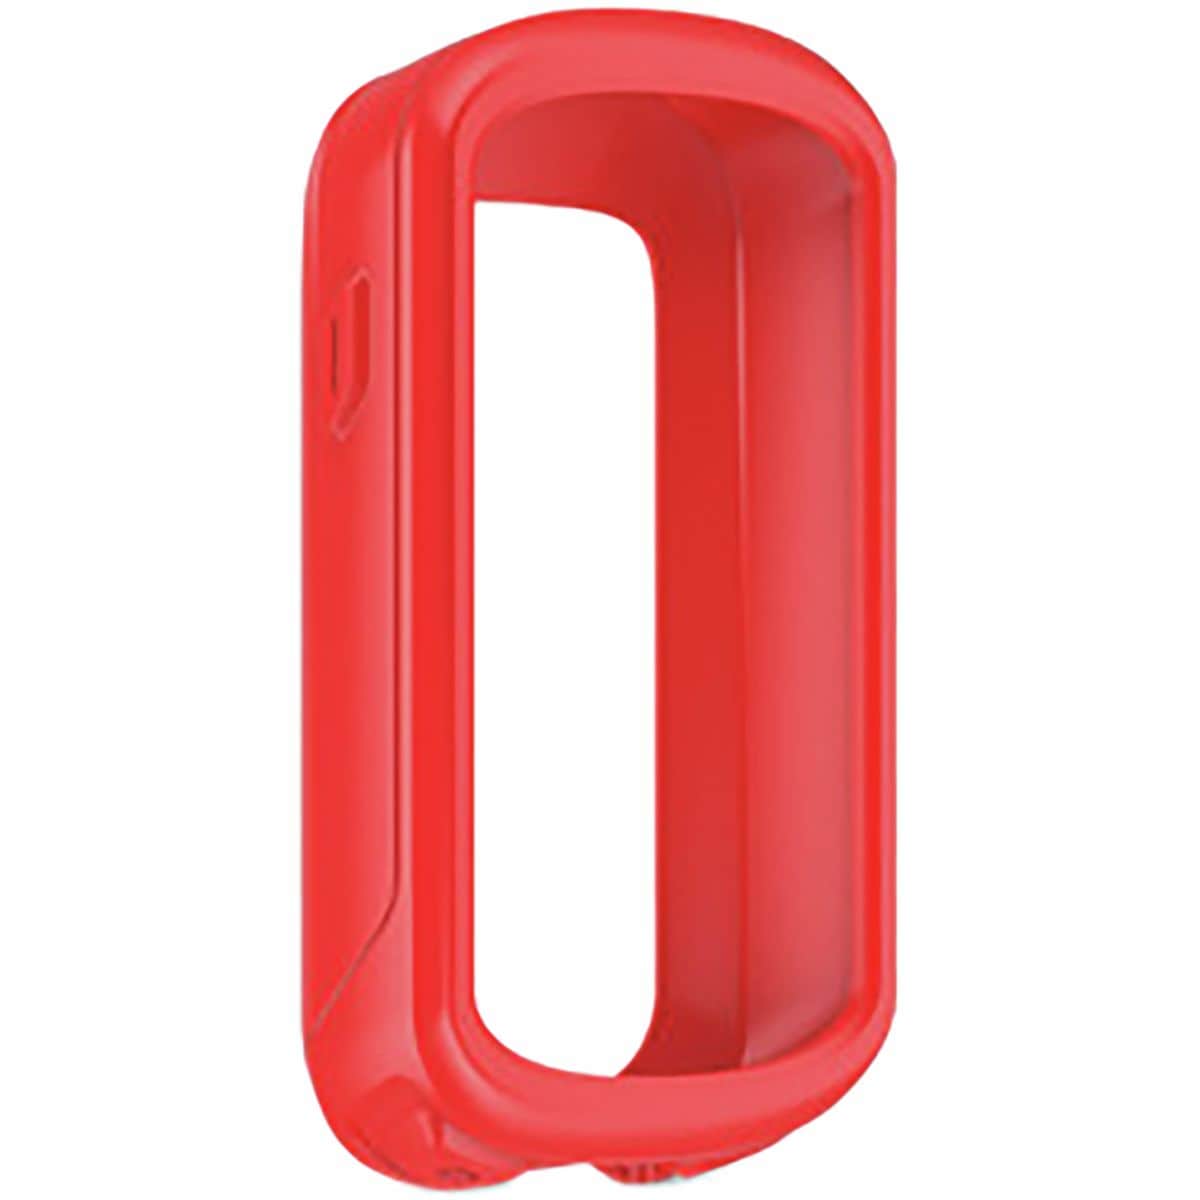 Garmin Edge 830 Silicone Case Red, One Size